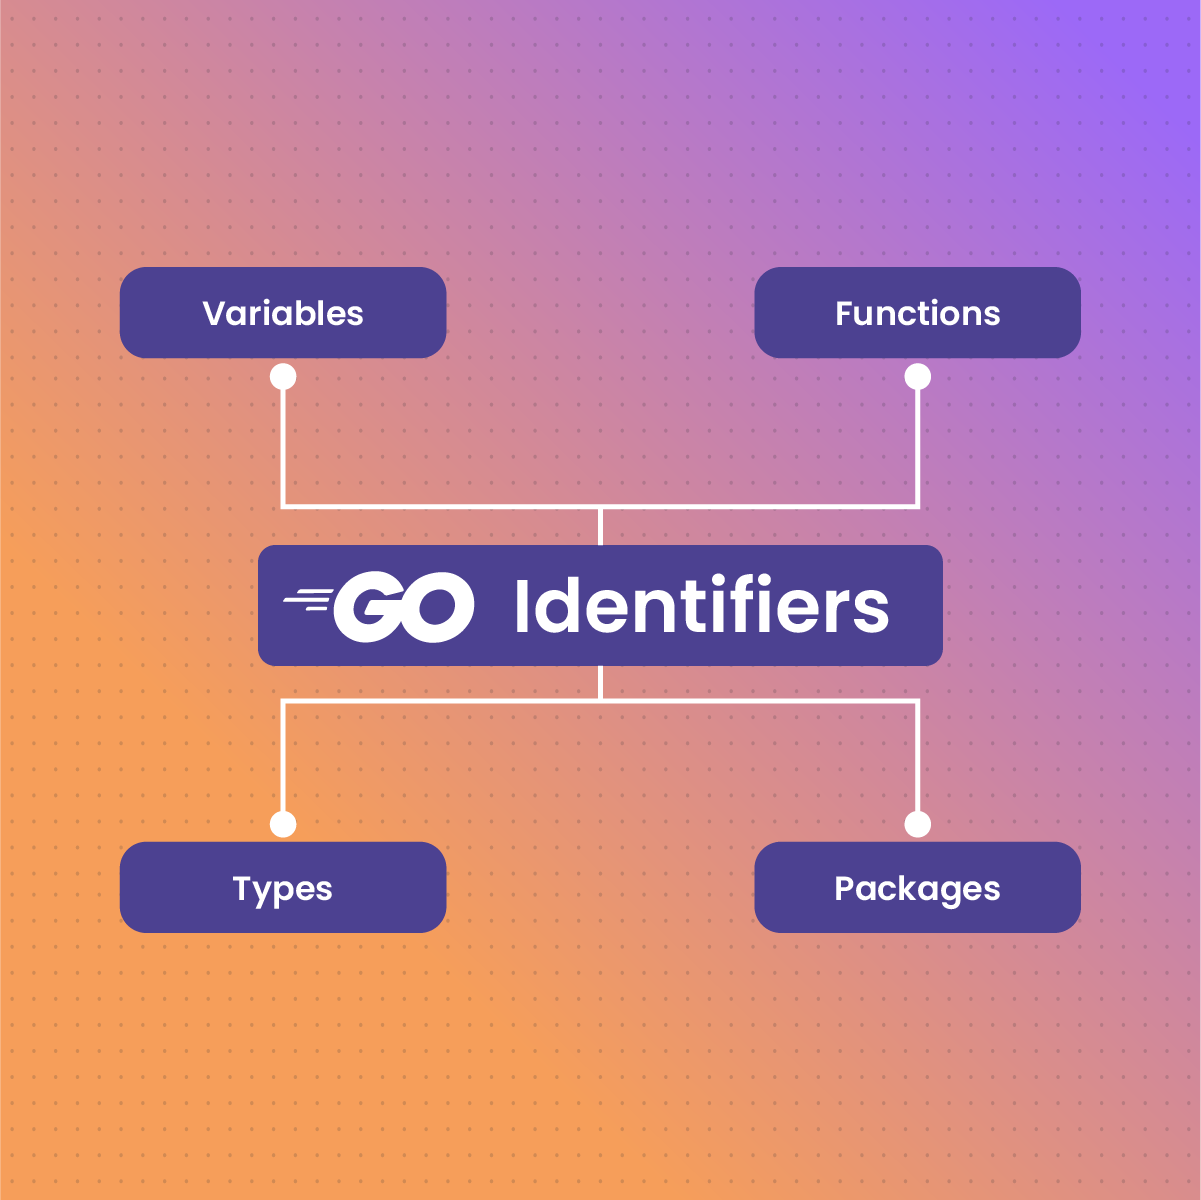  What is a Go Identifier?